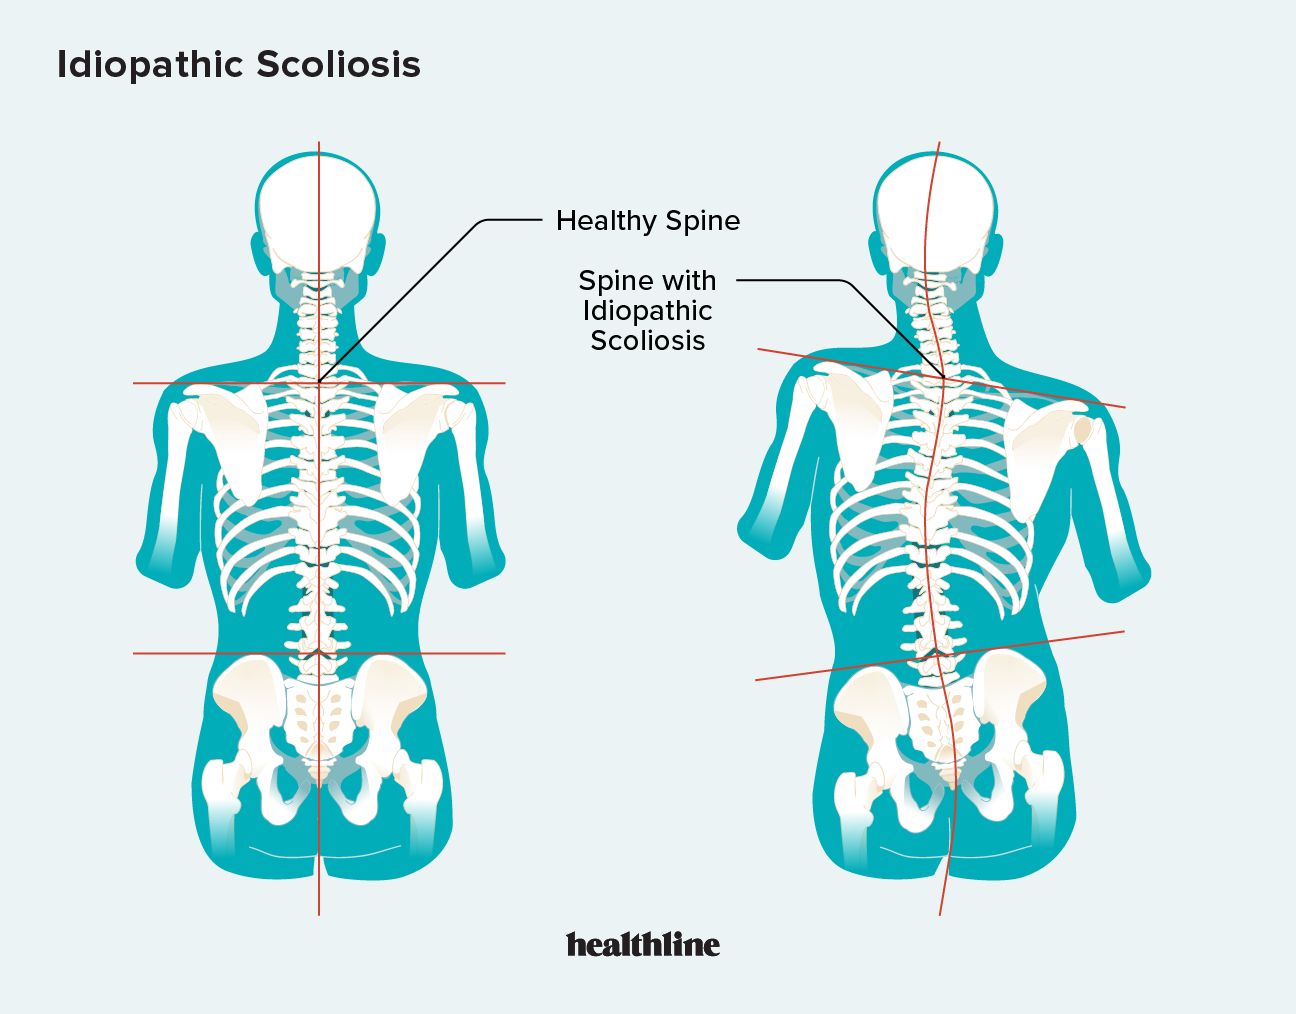 idiopathic scoliosis